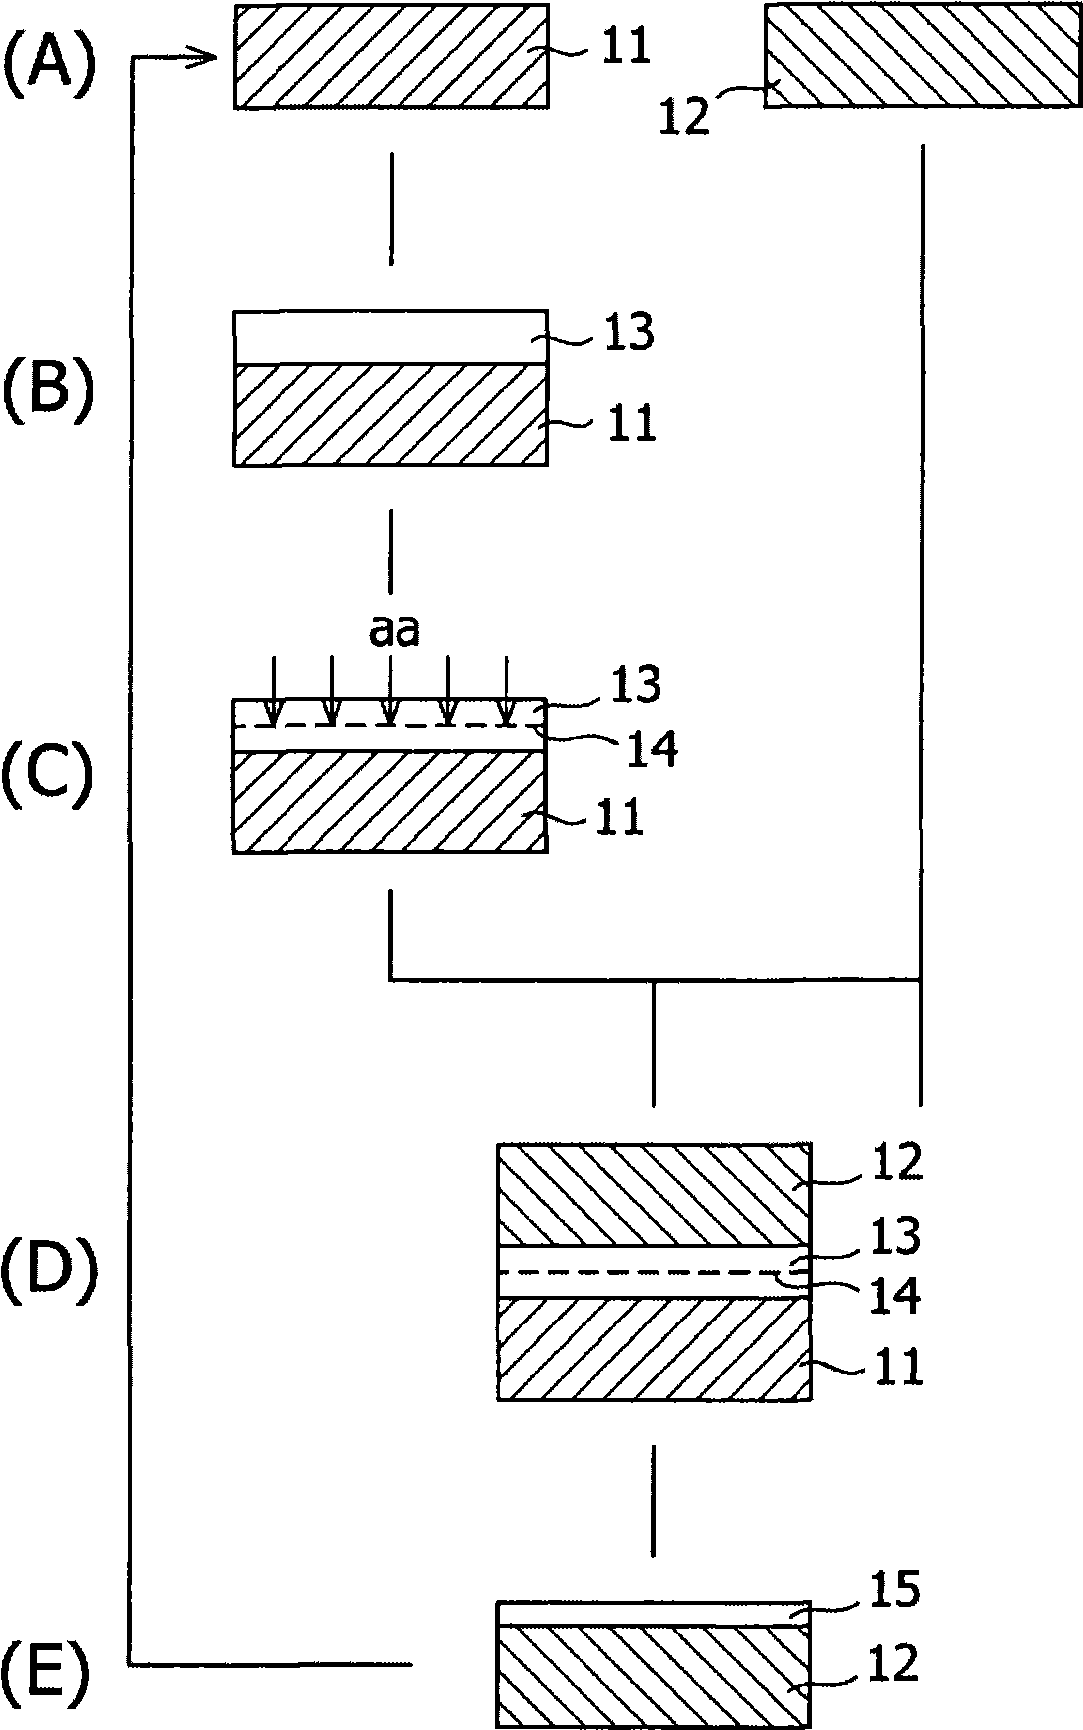 Method for preparing substrate having monocrystalline film